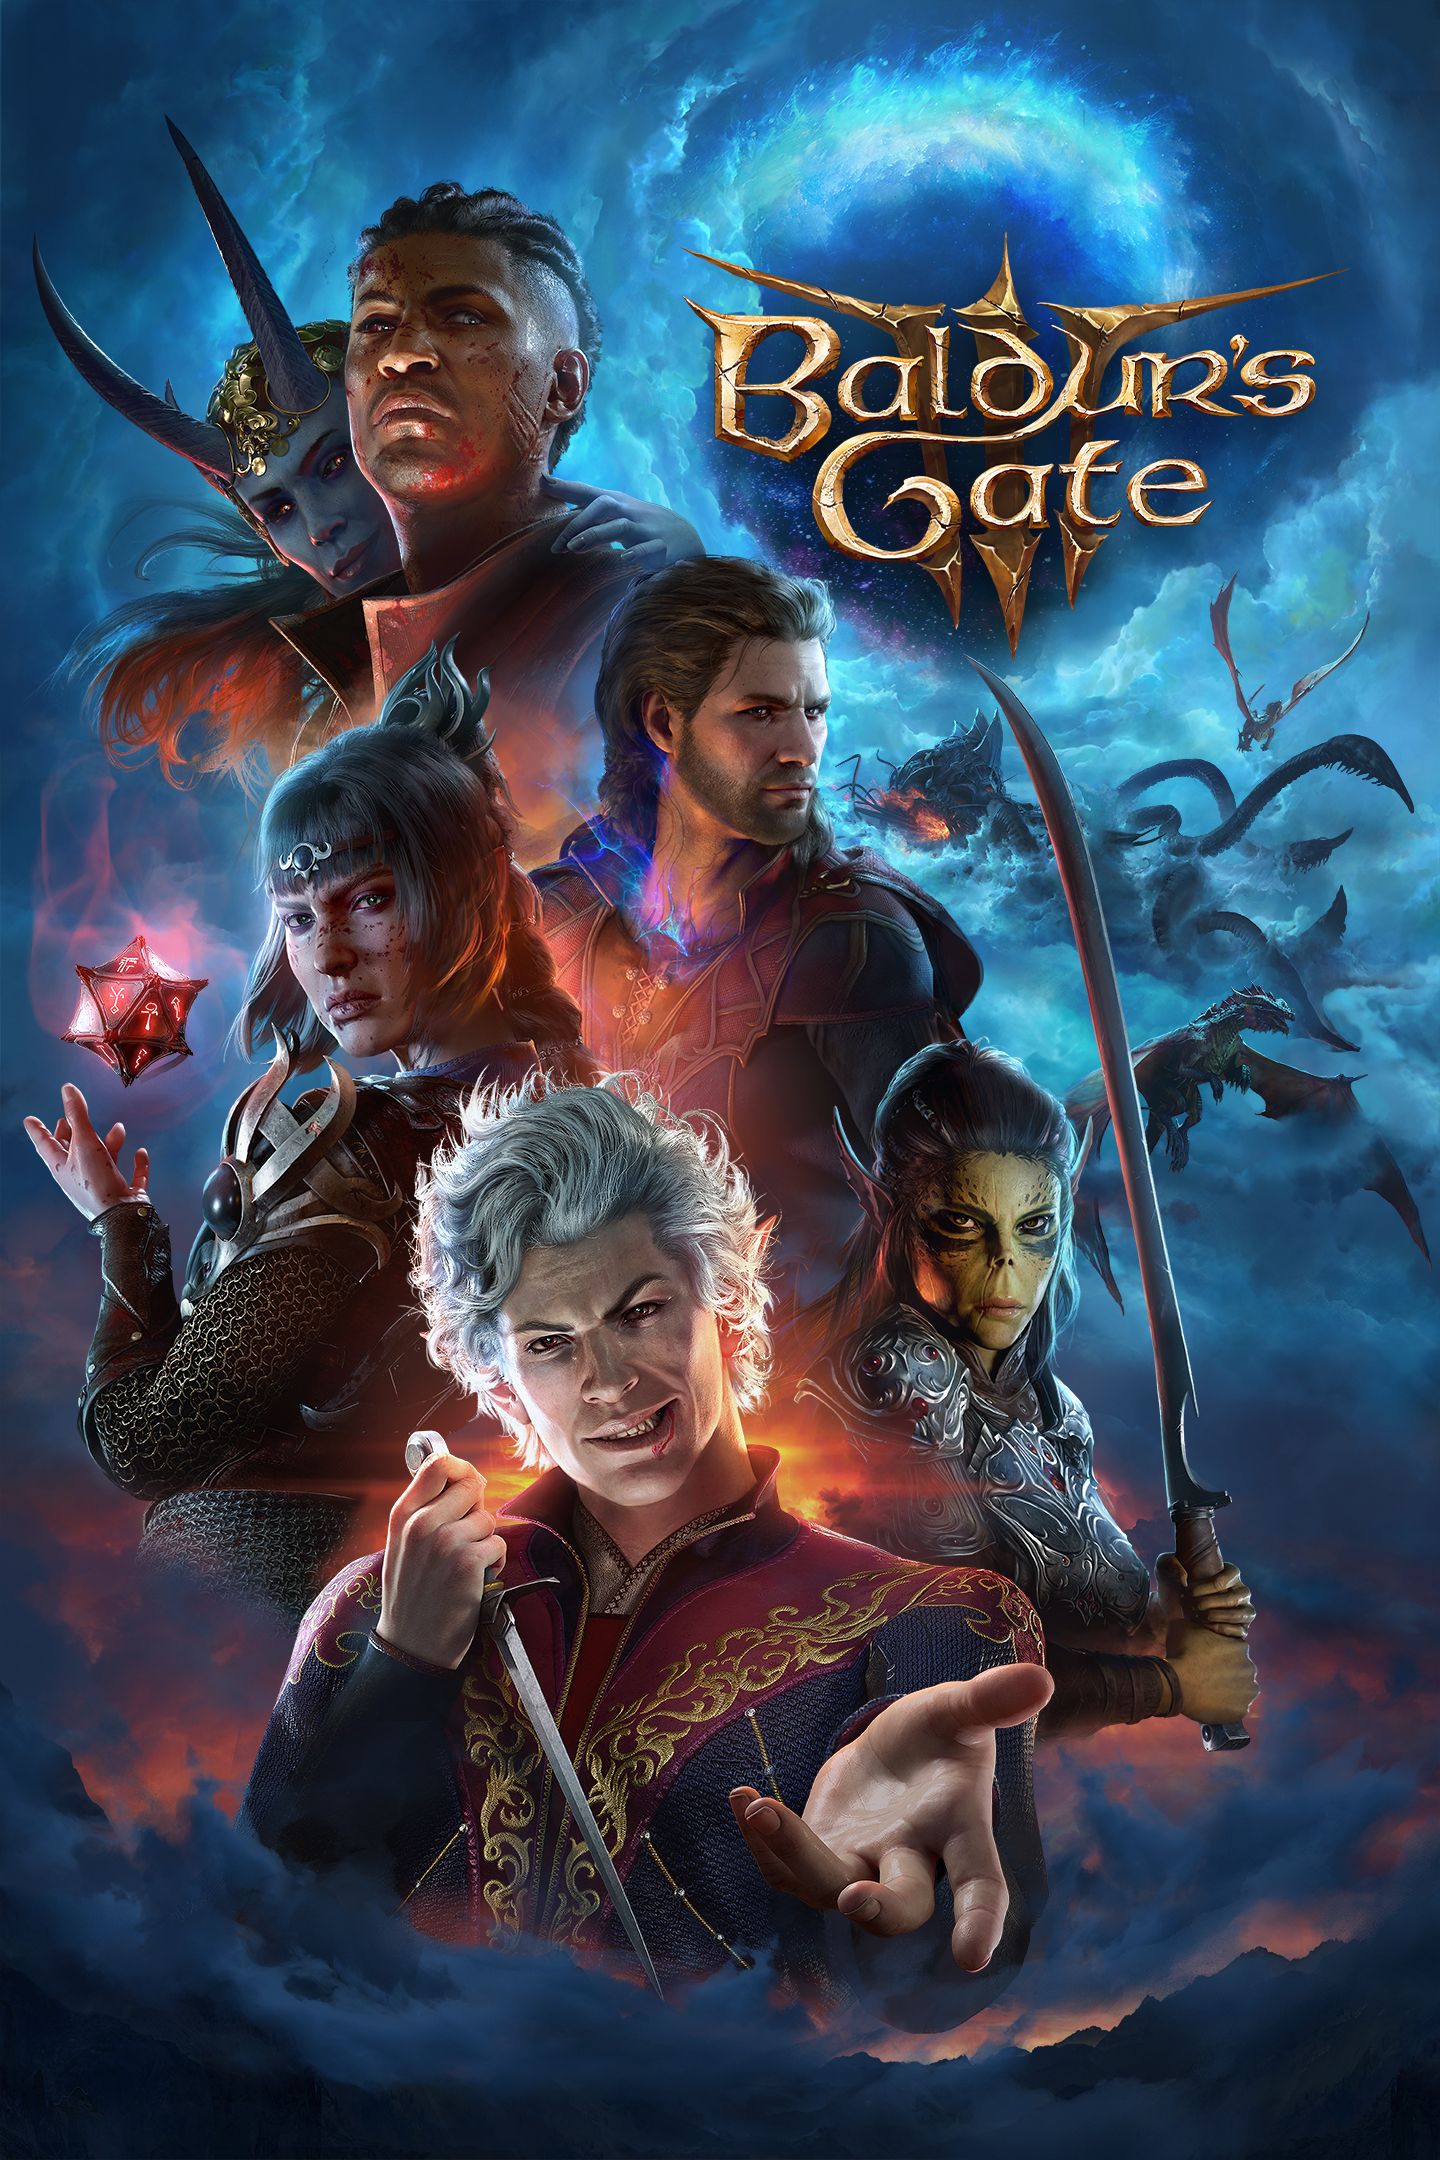 Baldurs Gate 3 Game Poster